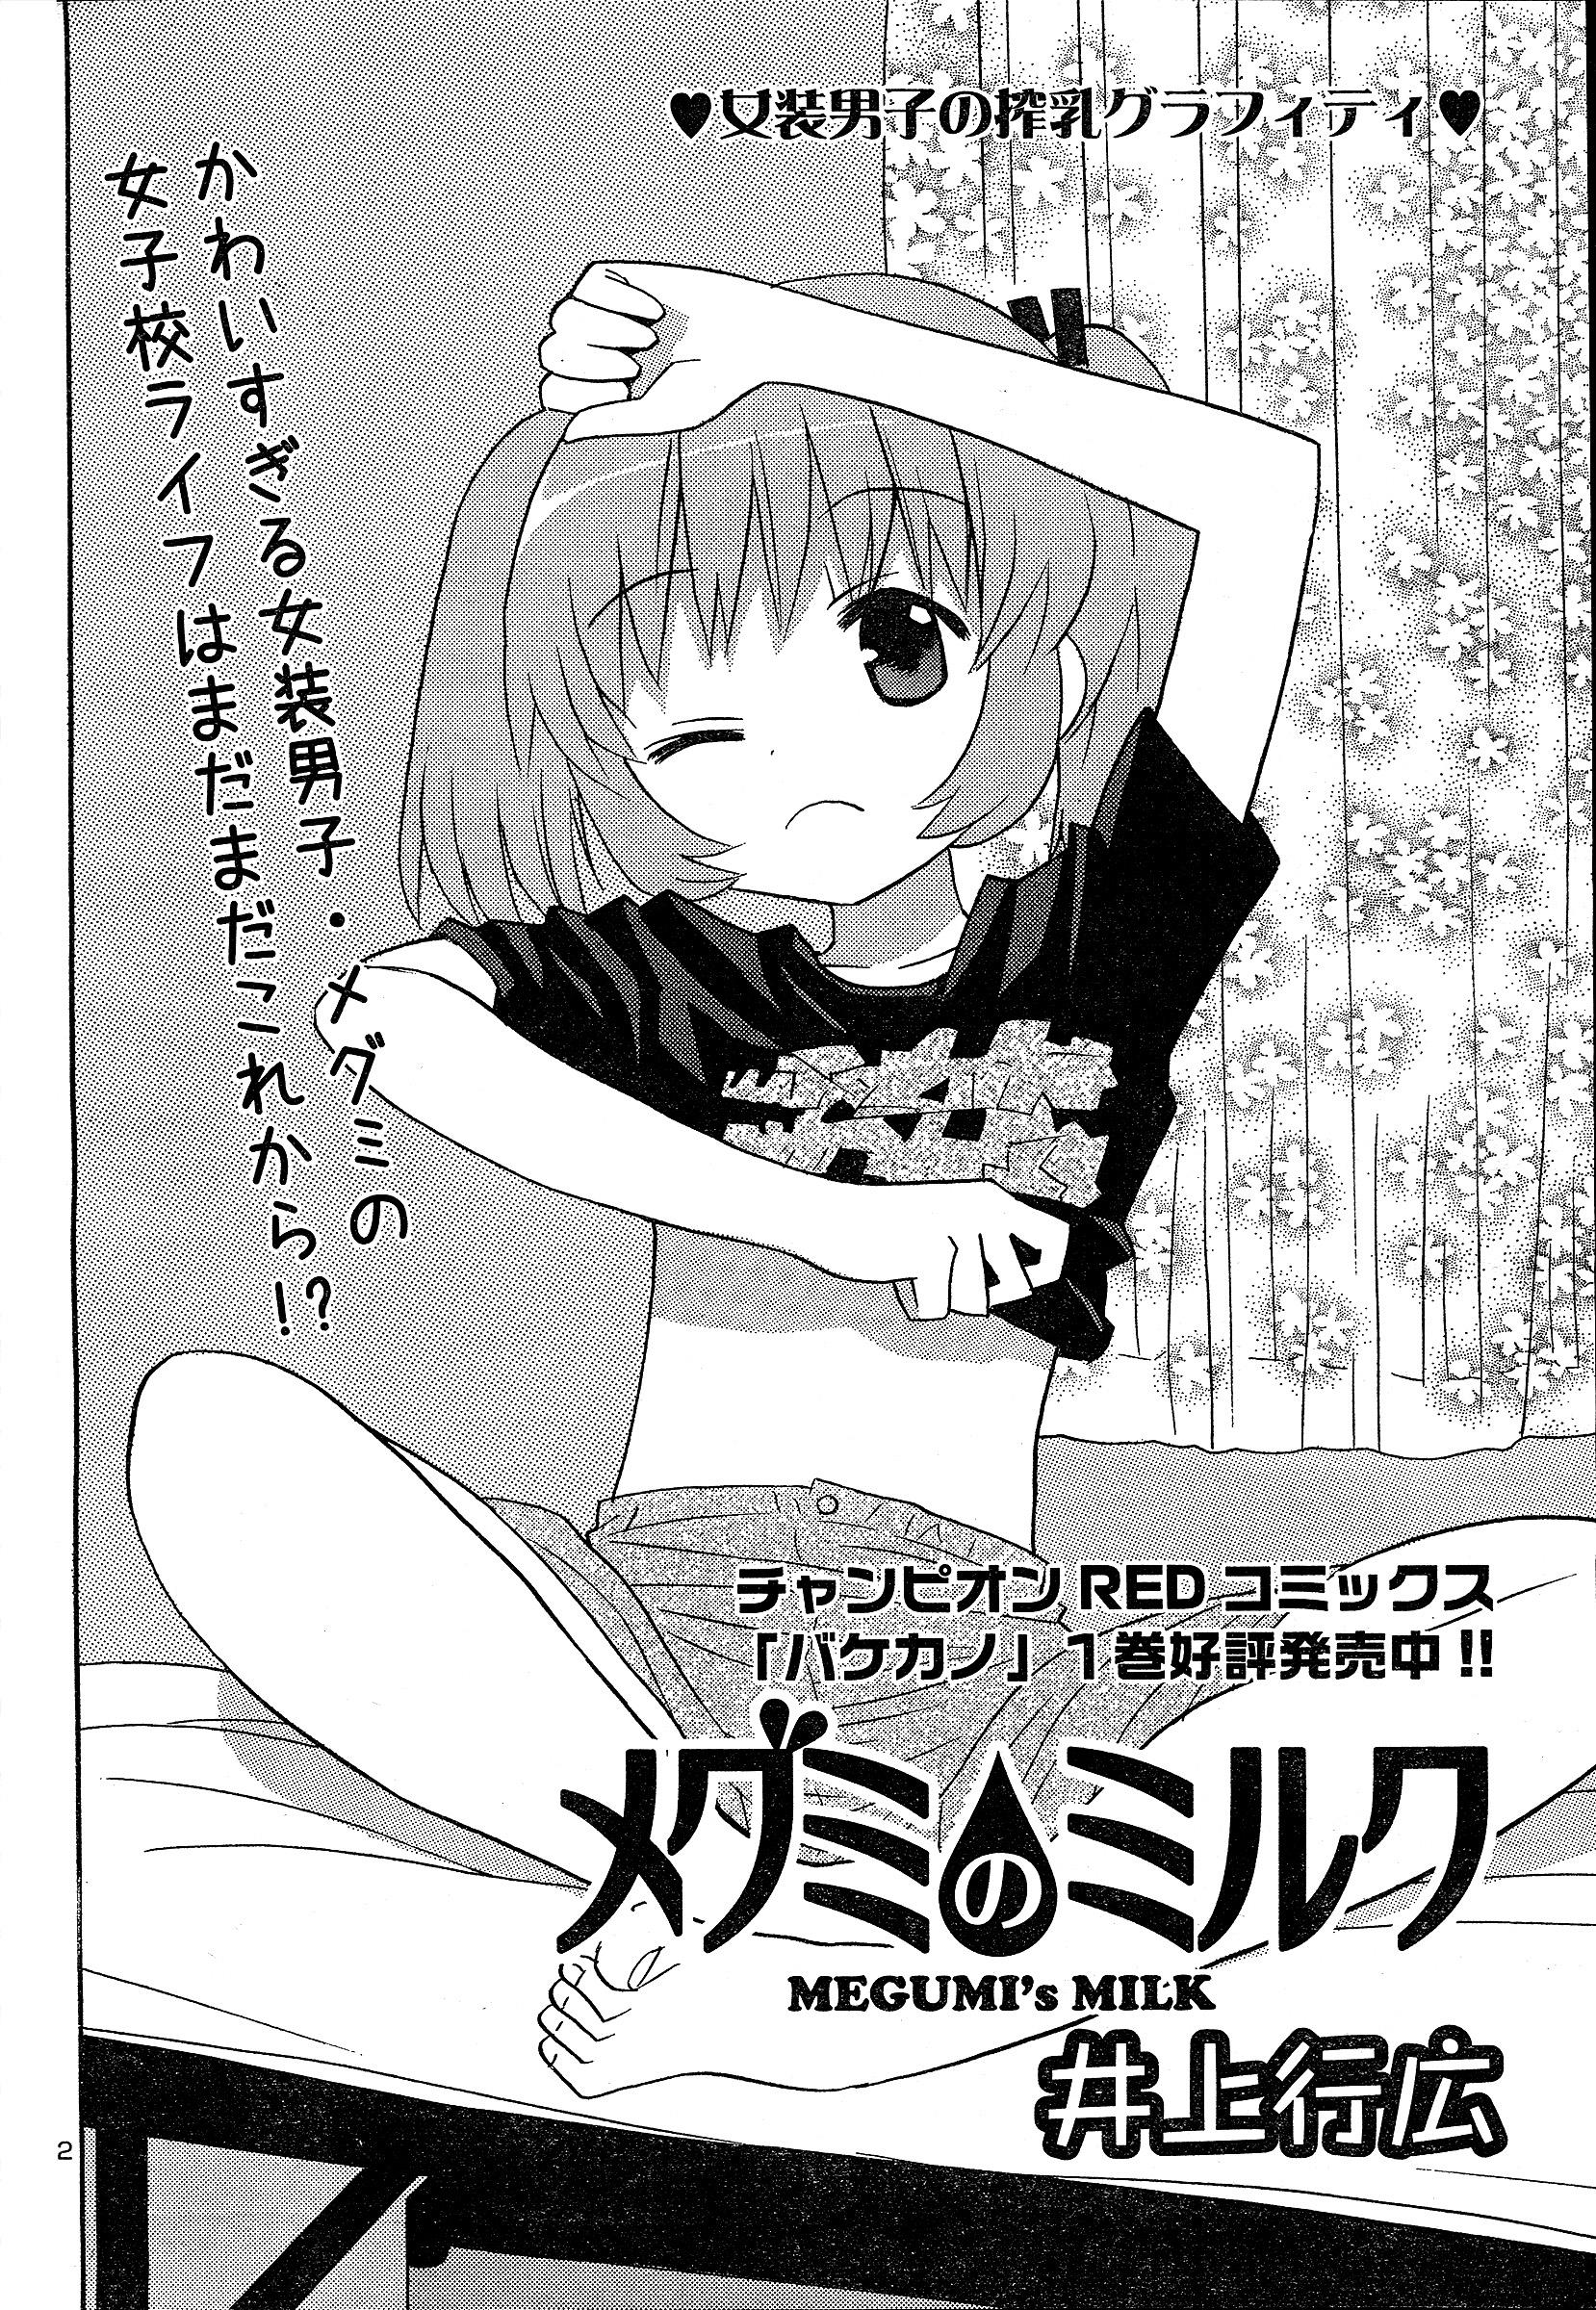 Megumi No Milk - Page 2